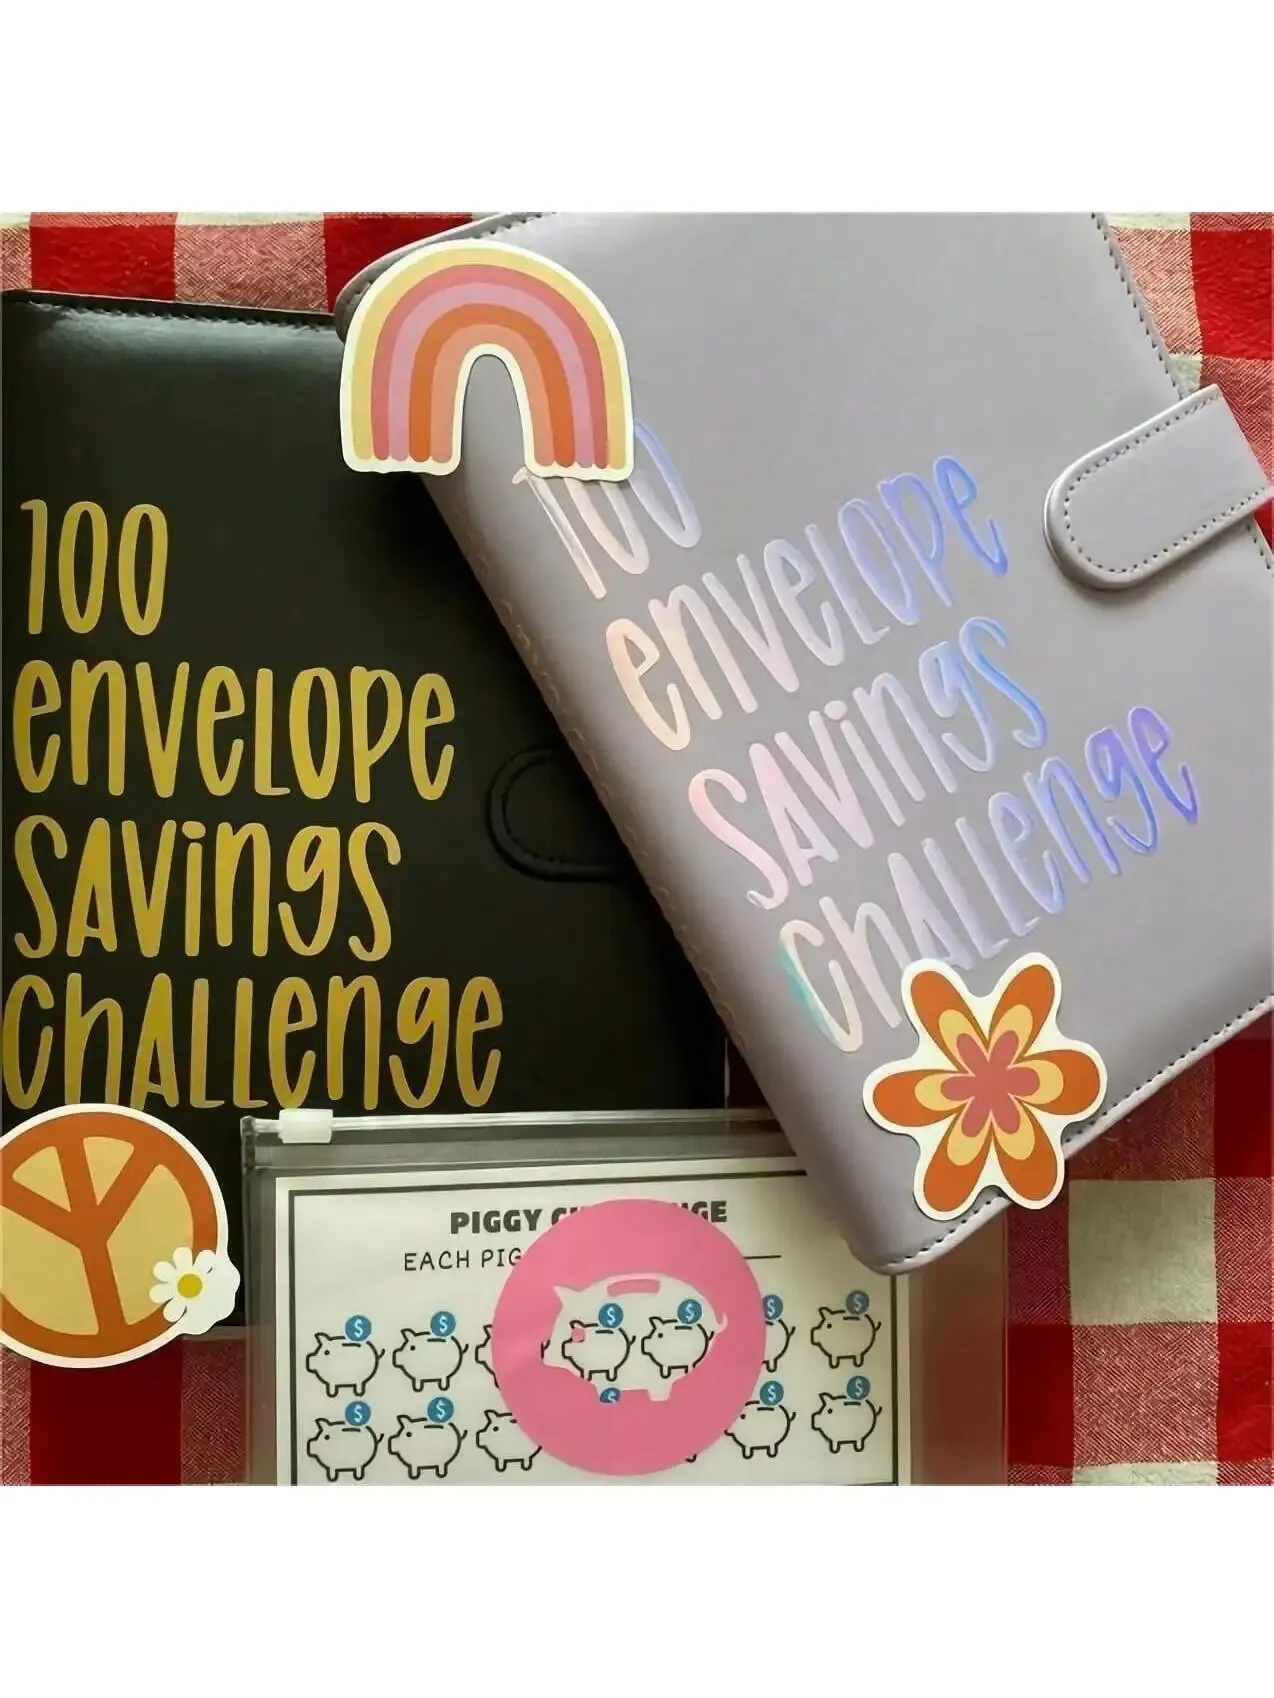 Envelope Challenge Binder, Orçamento Binder, Maneira fácil e divertida de economizar, $5,050, $100, Dropshipping